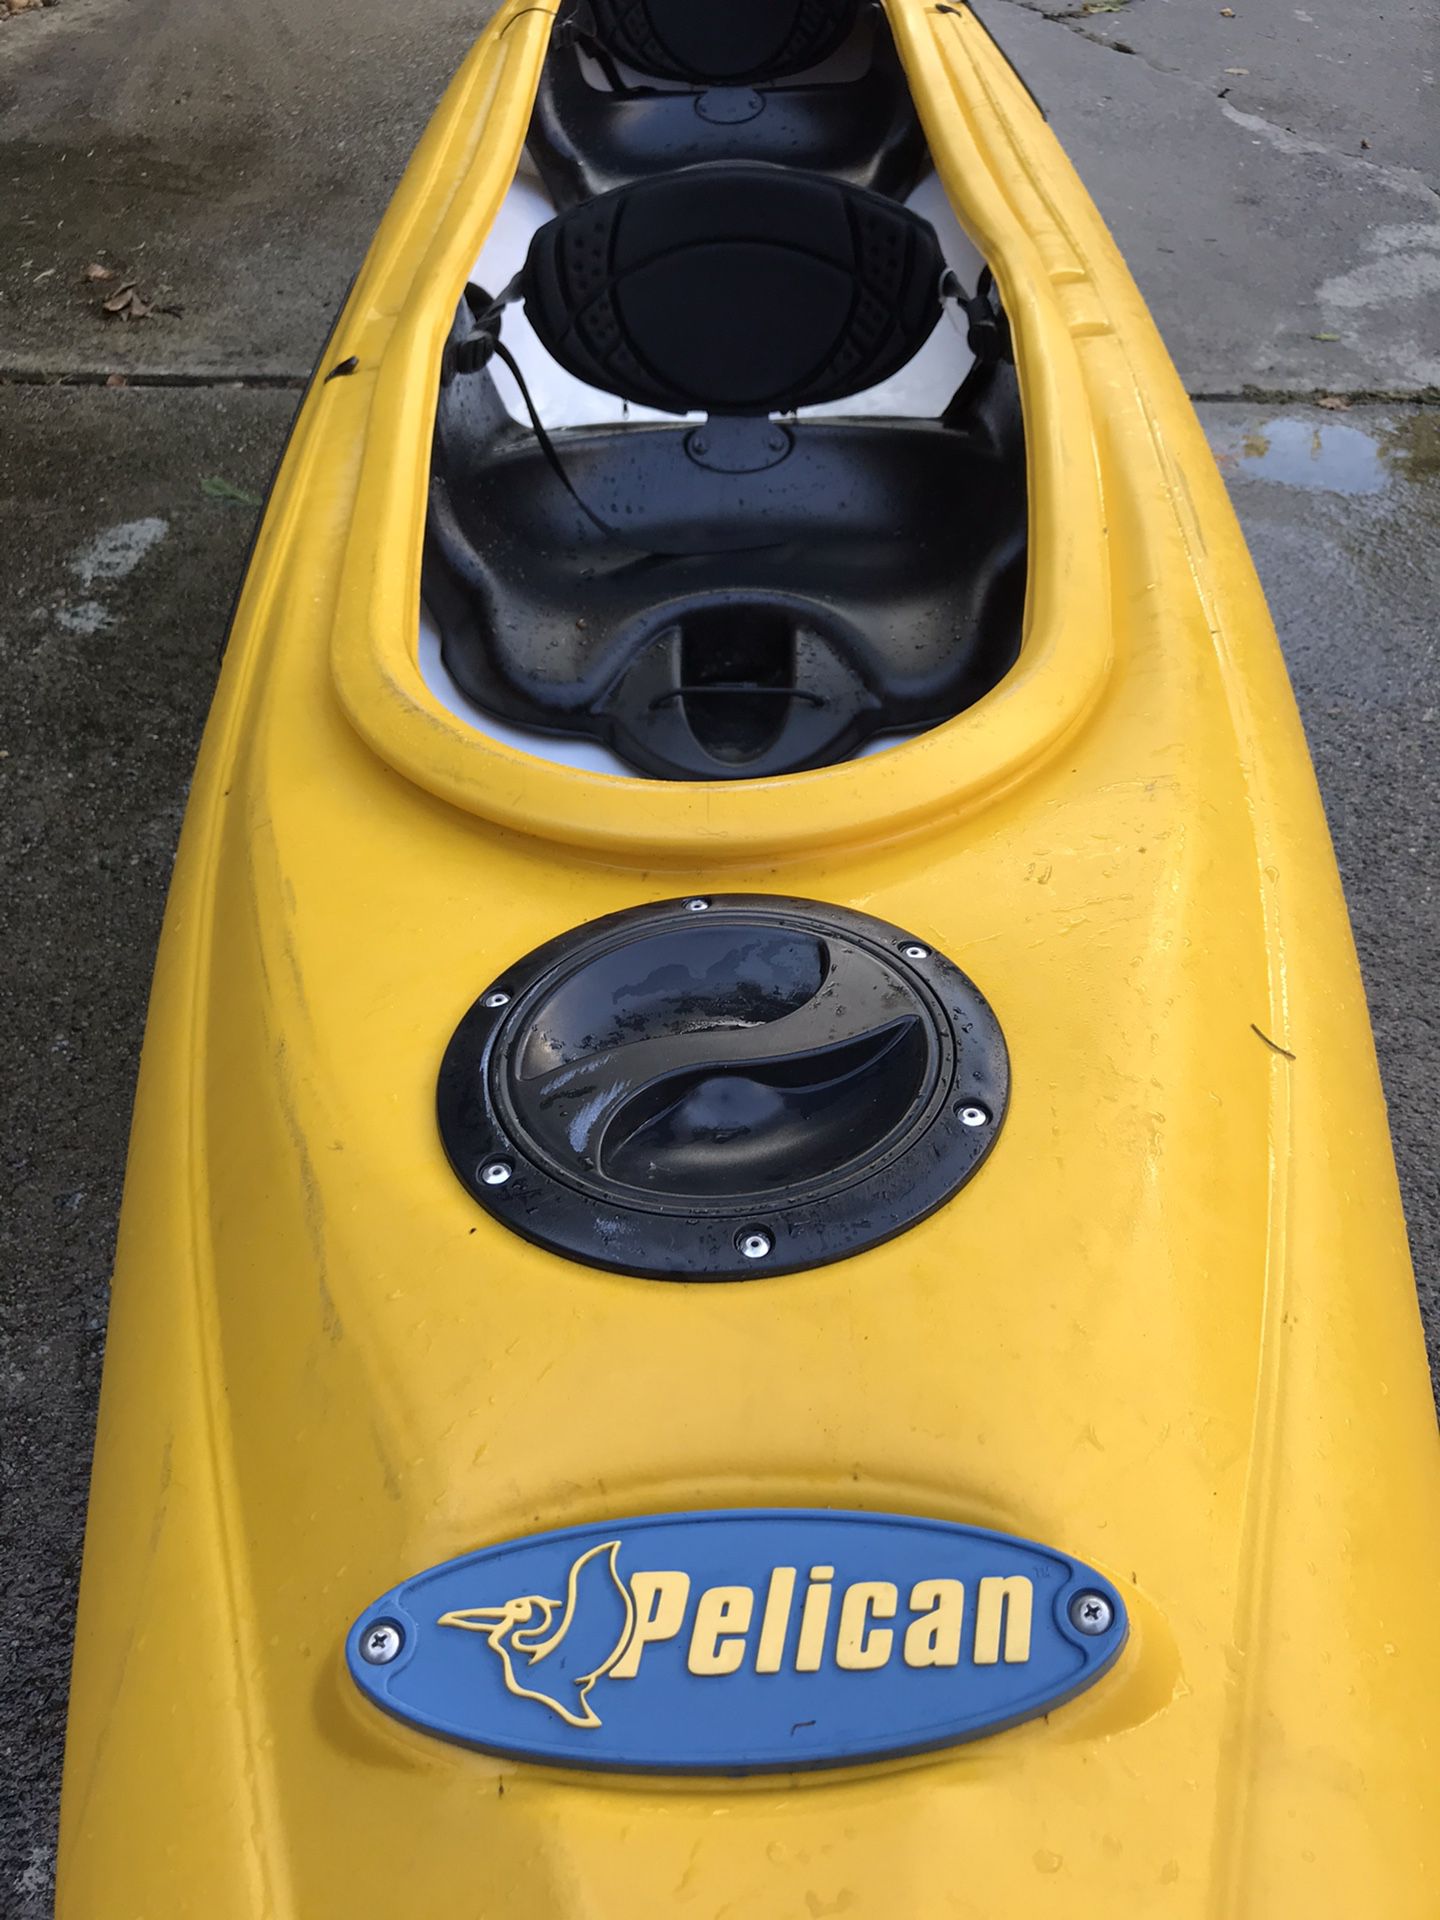 Pelican Kayak with paddles